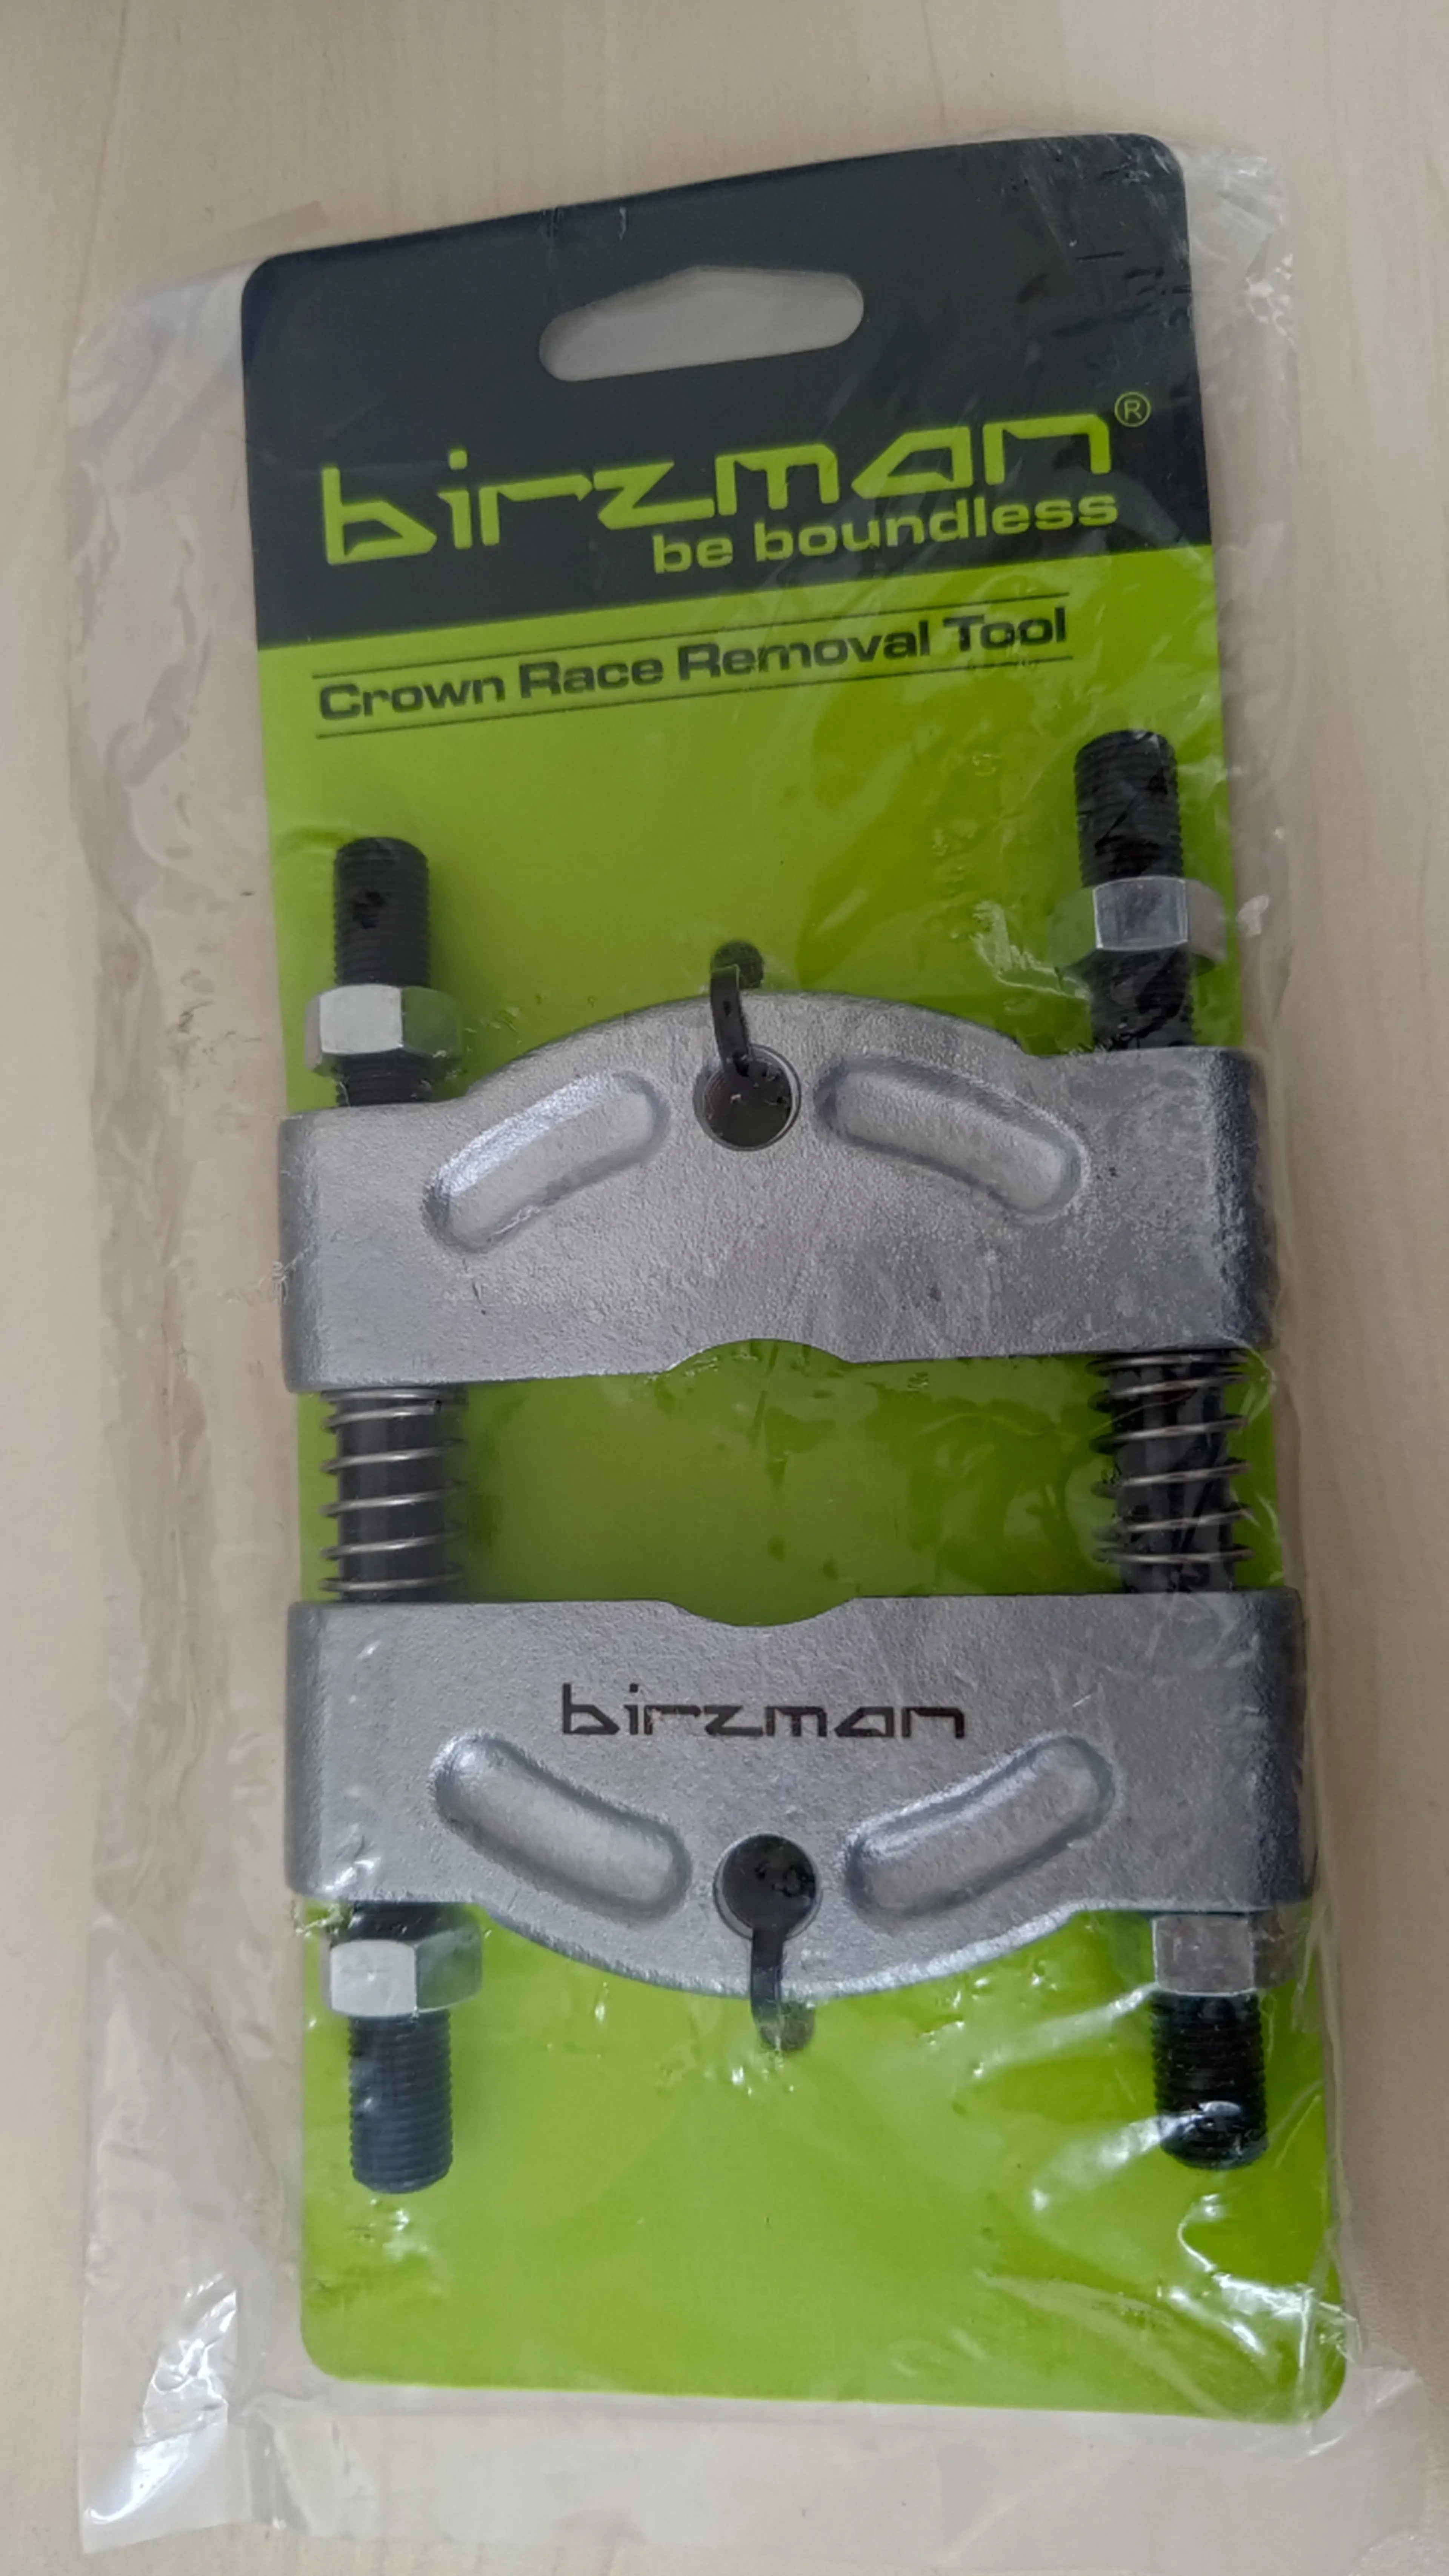 1. Birzman Crown Race removal tool